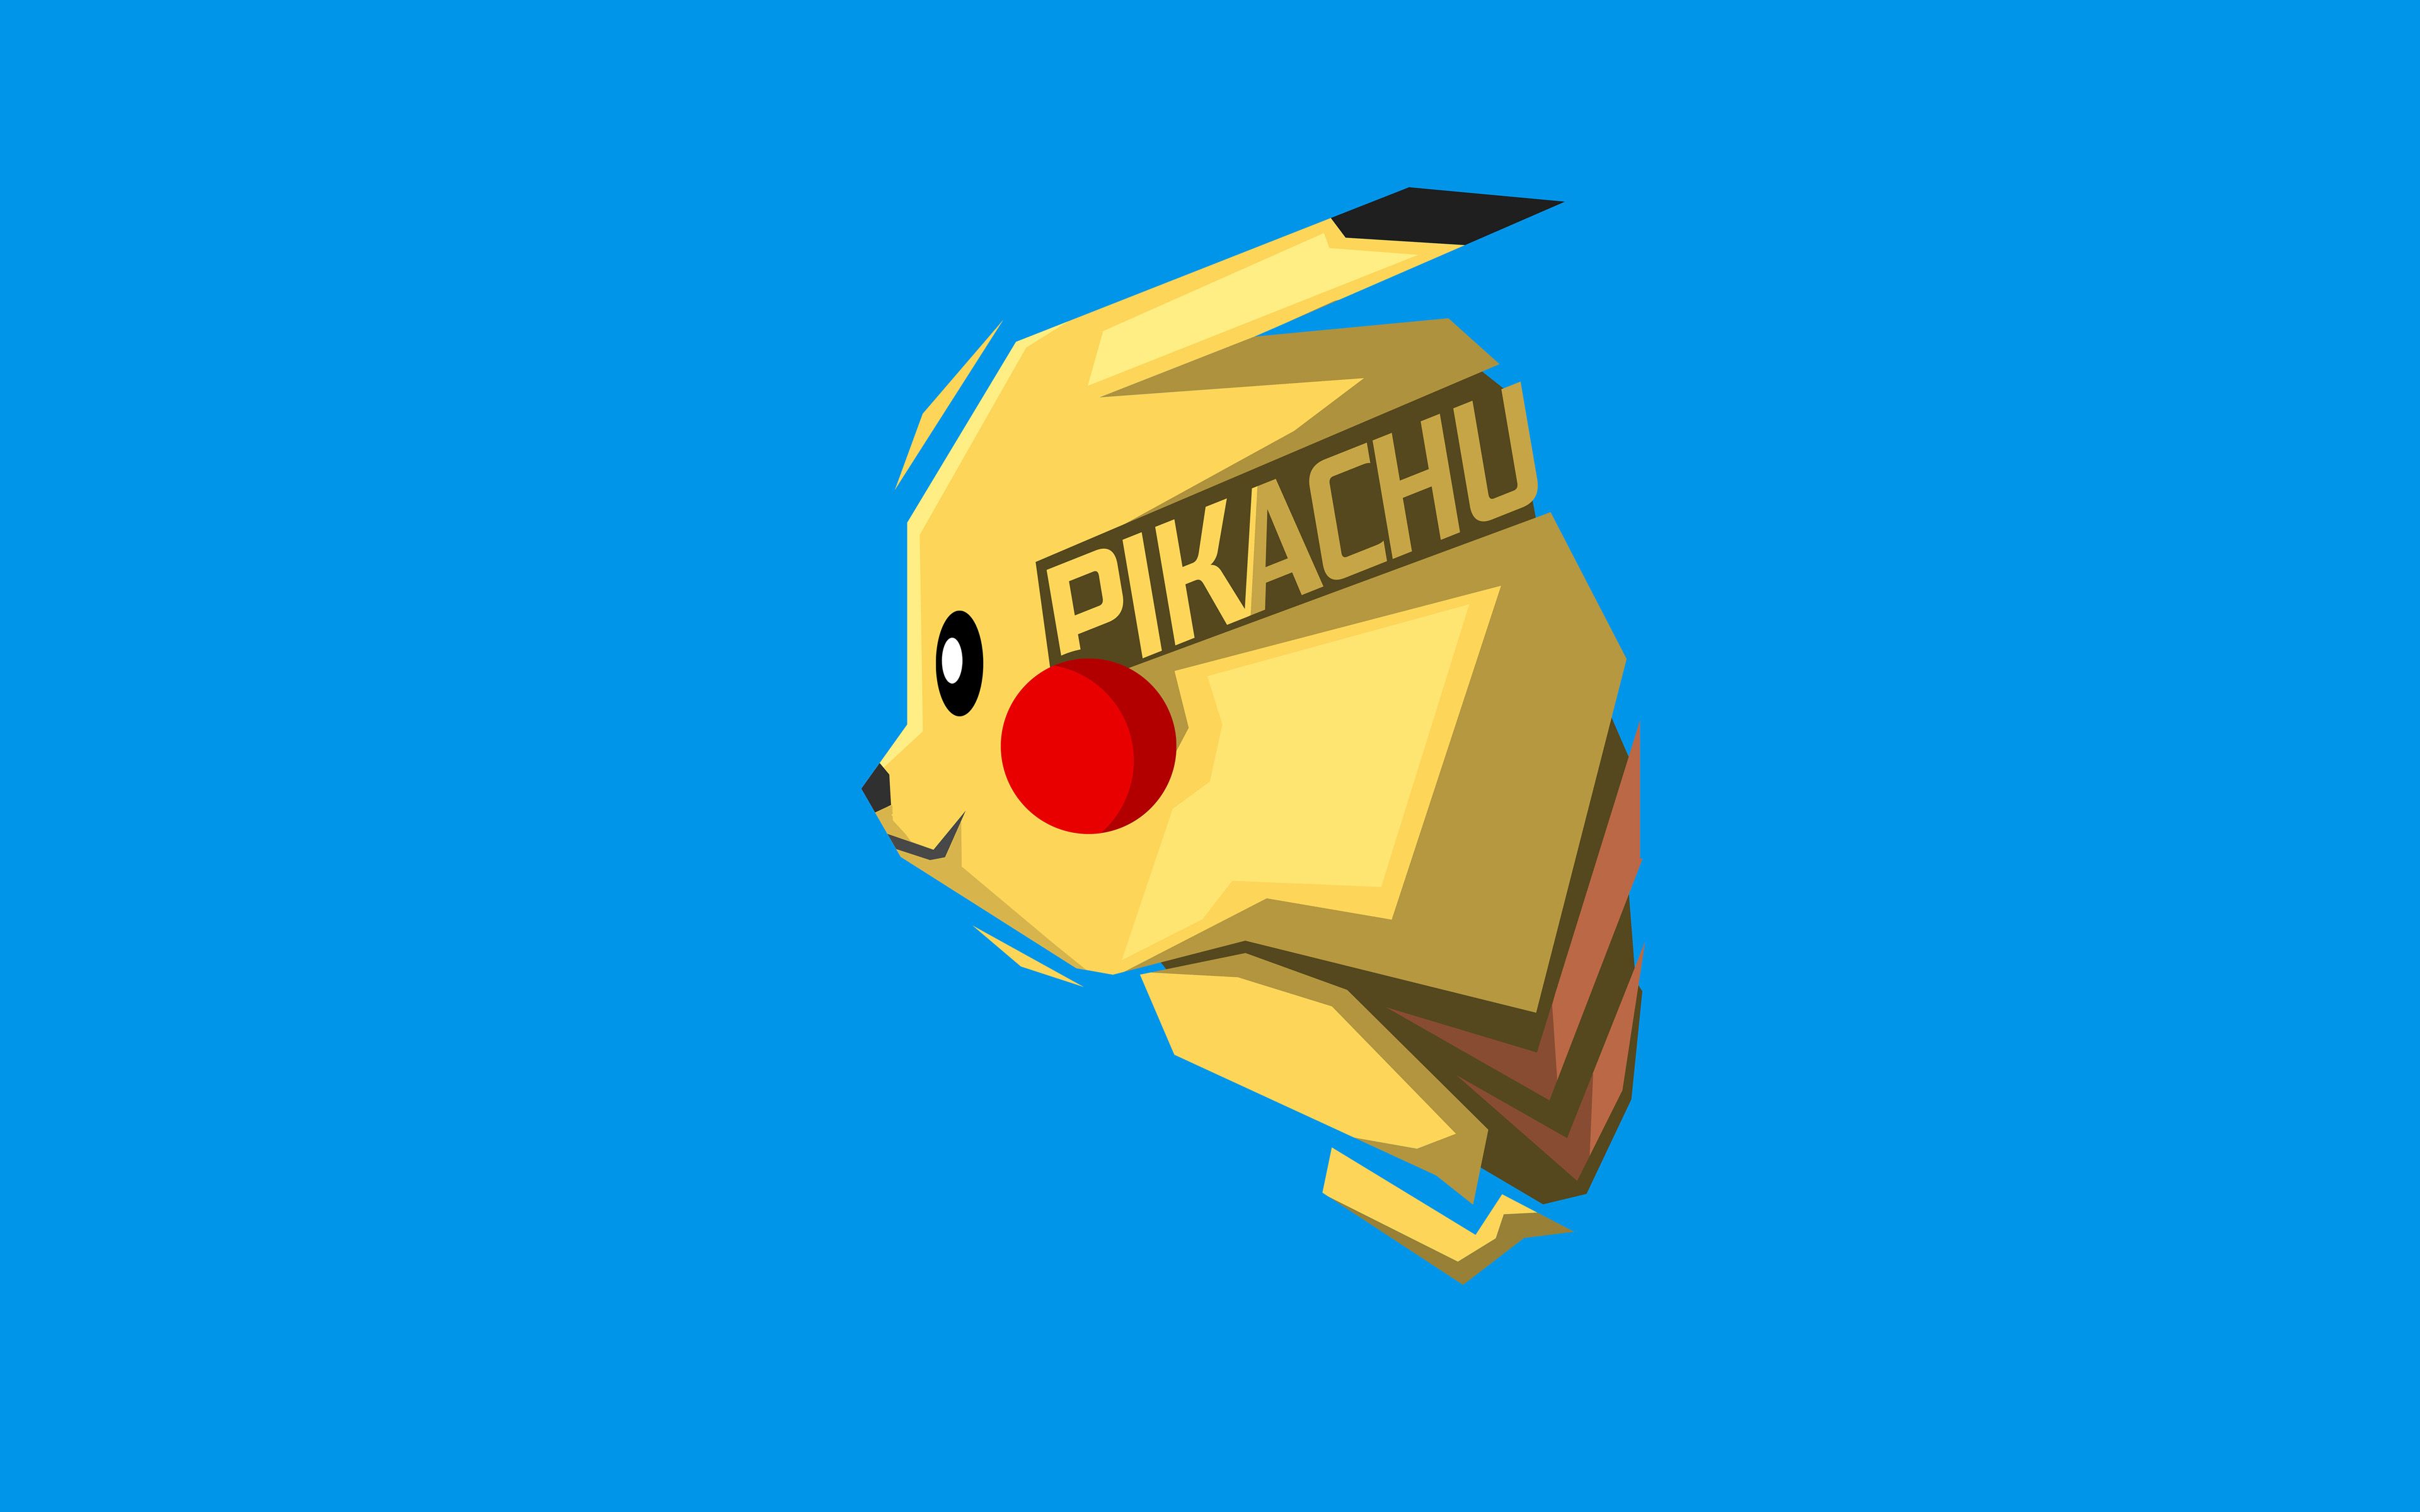 Download wallpaper Pikachu, 4k, minimal, Pokemon, blue background